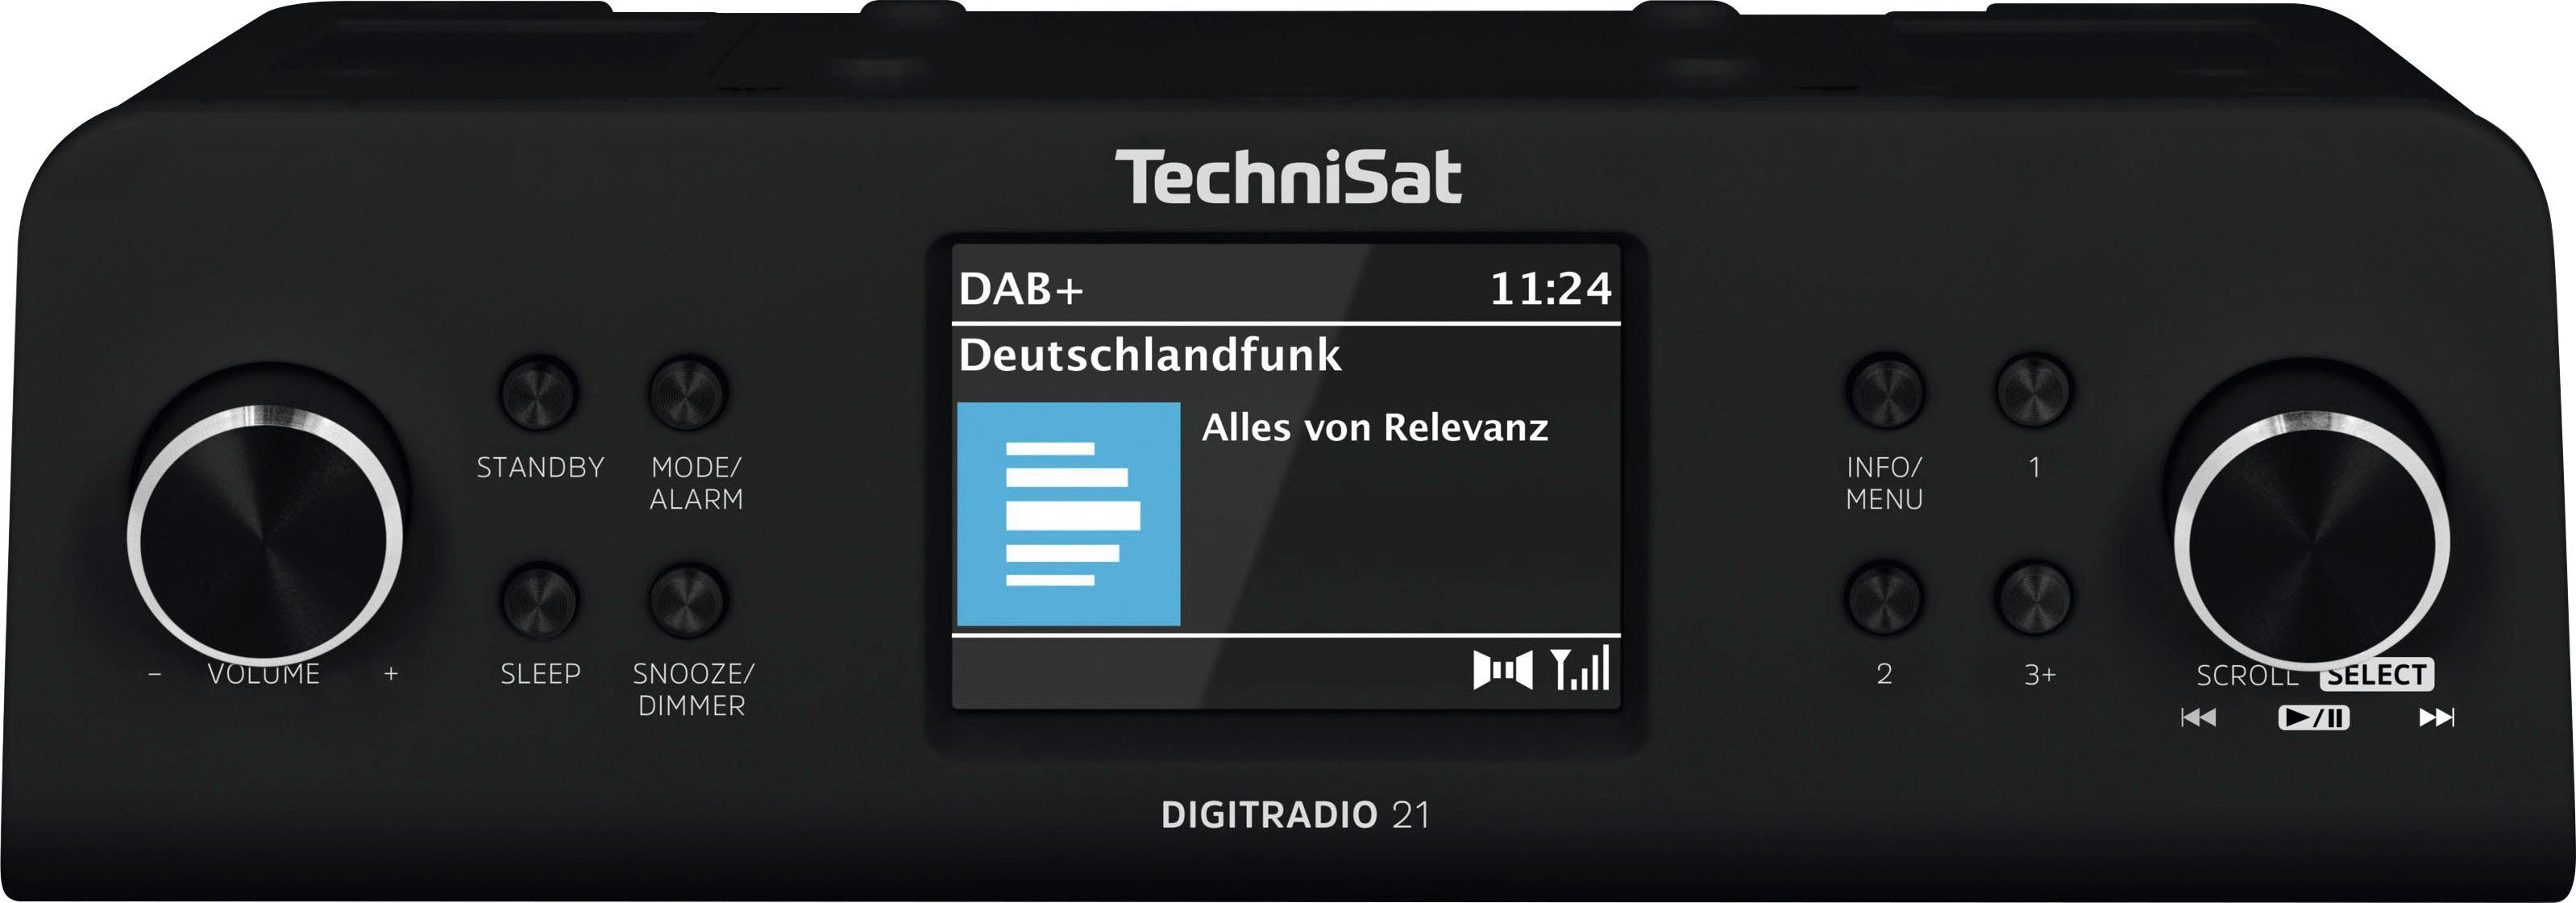 TechniSat DIGITRADIO 21 Küchen-Radio (Digitalradio (DAB), UKW mit RDS, 2 W, Unterbau-Radio,Küchen-Radio) schwarz